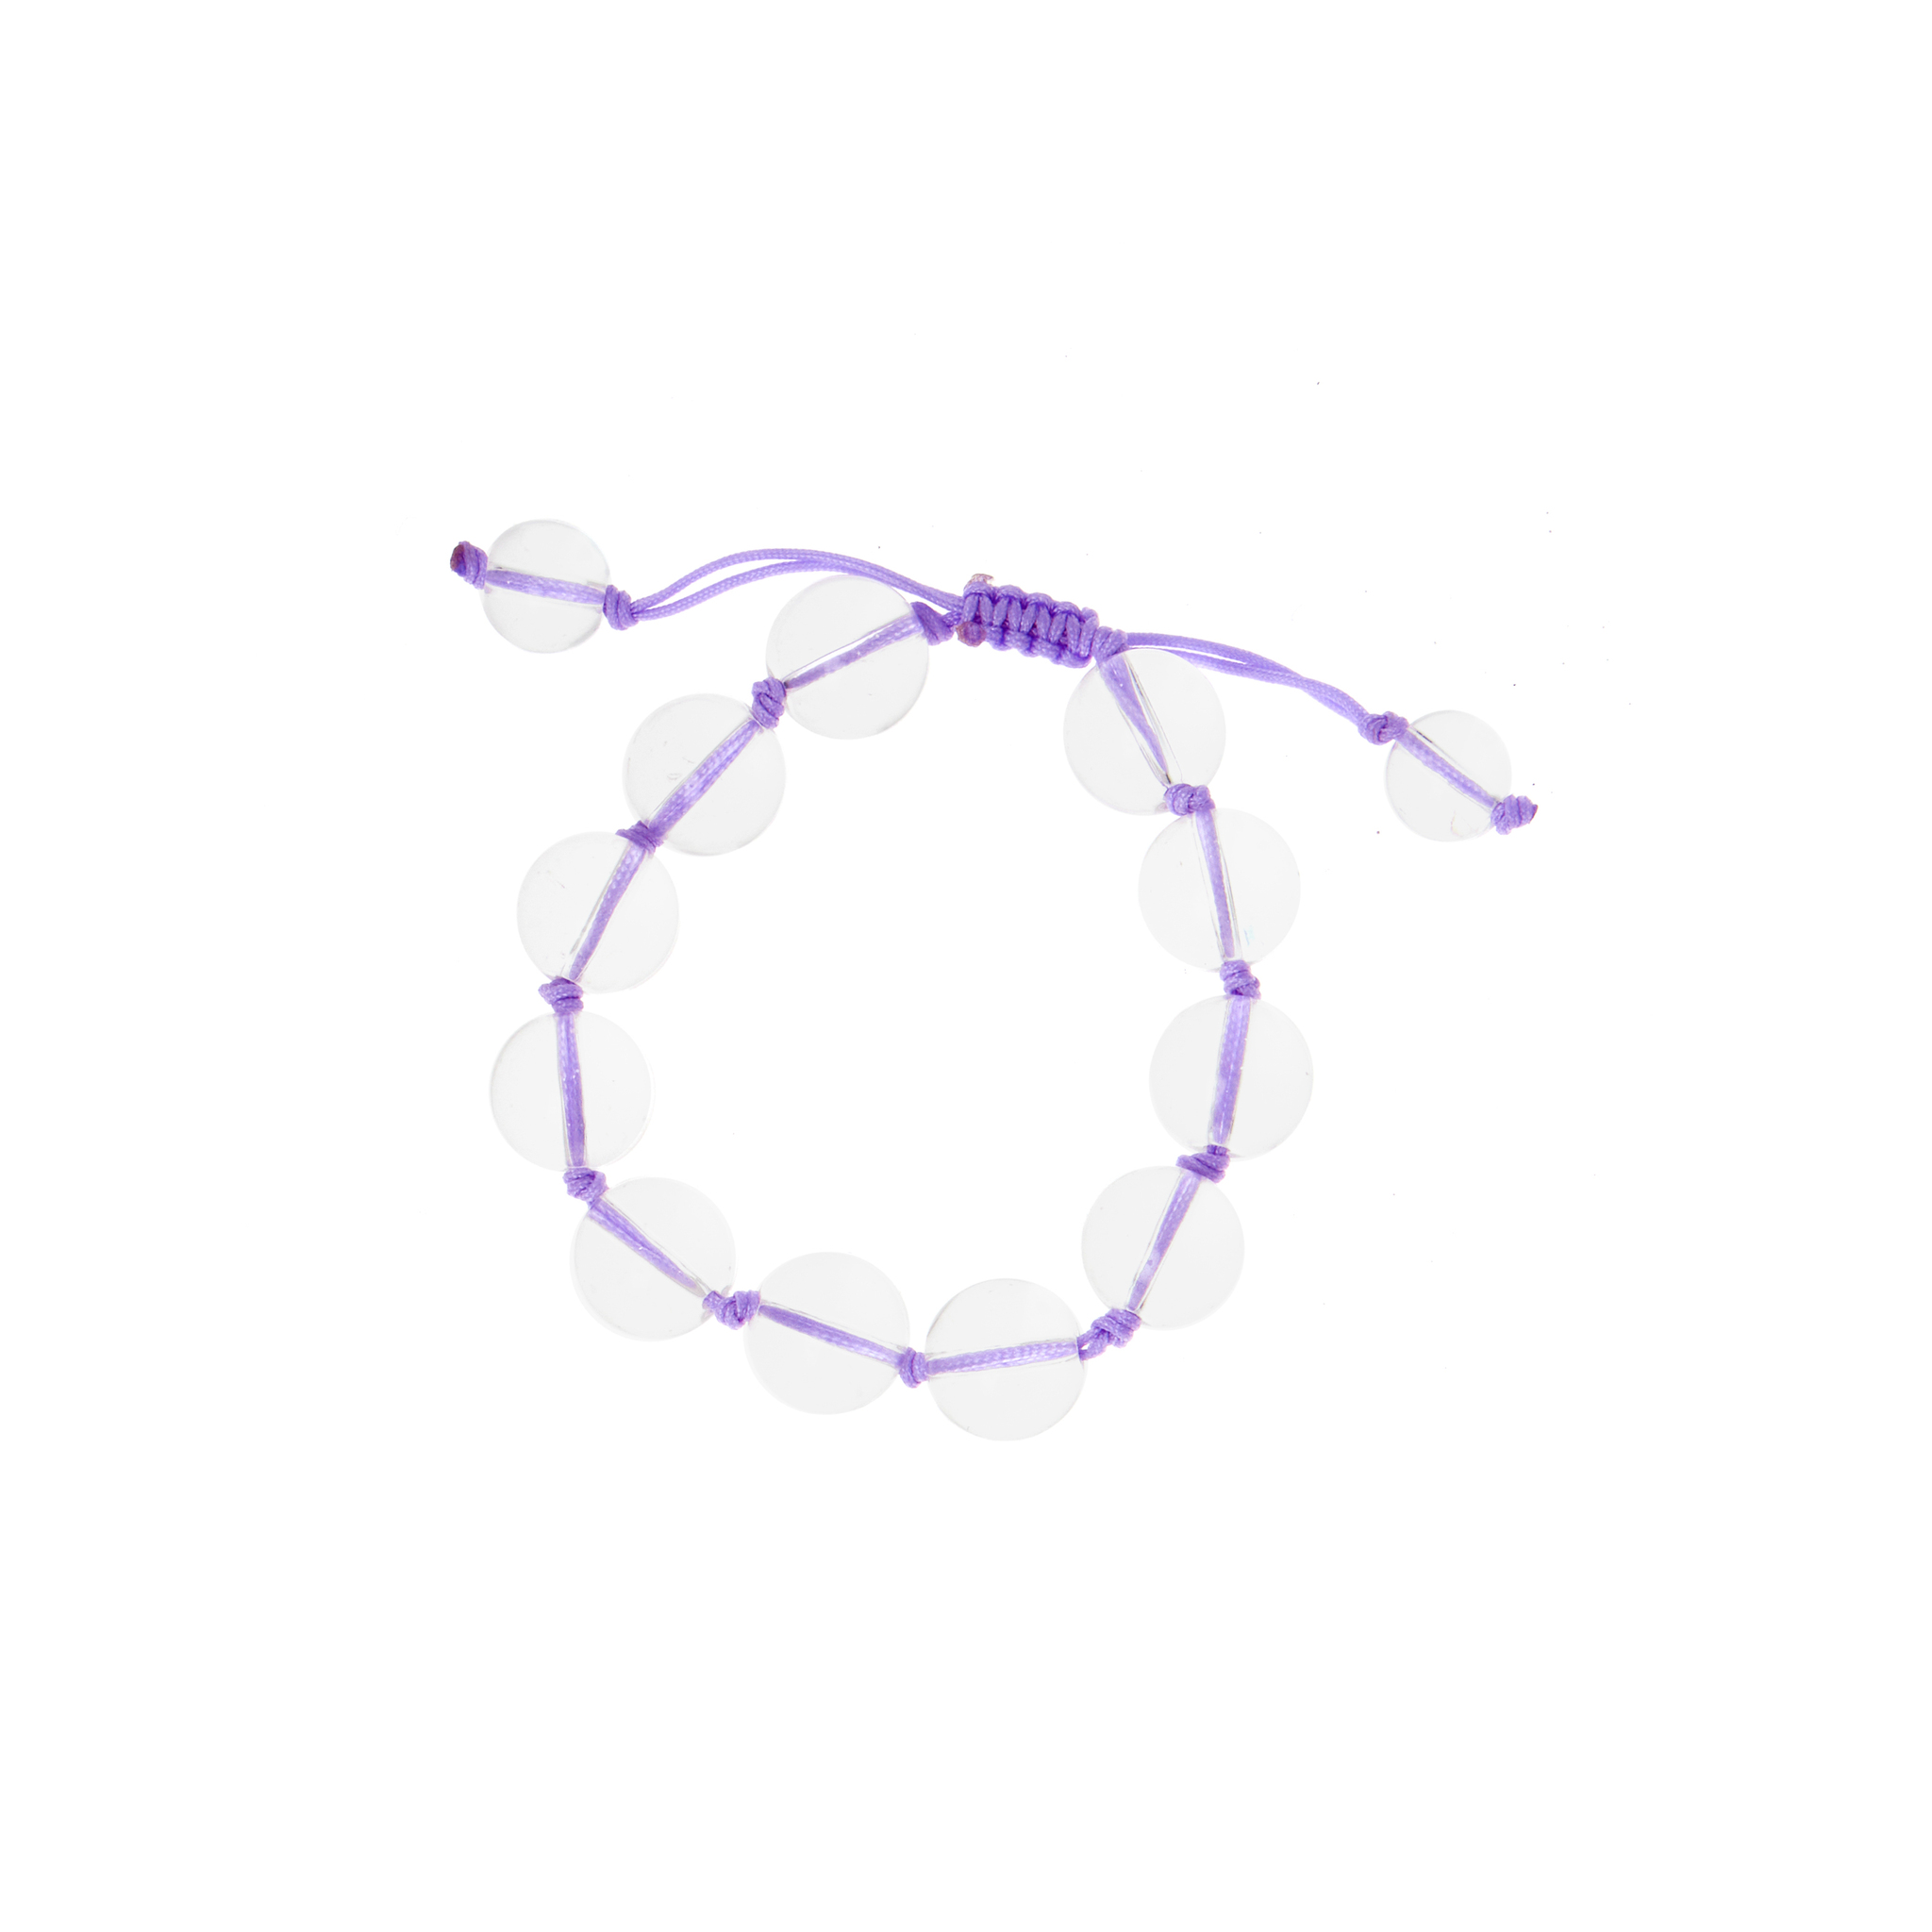 HOLLY JUNE Браслет Crystal Clear Bracelet – Violet holly june браслет double colorful bracelet